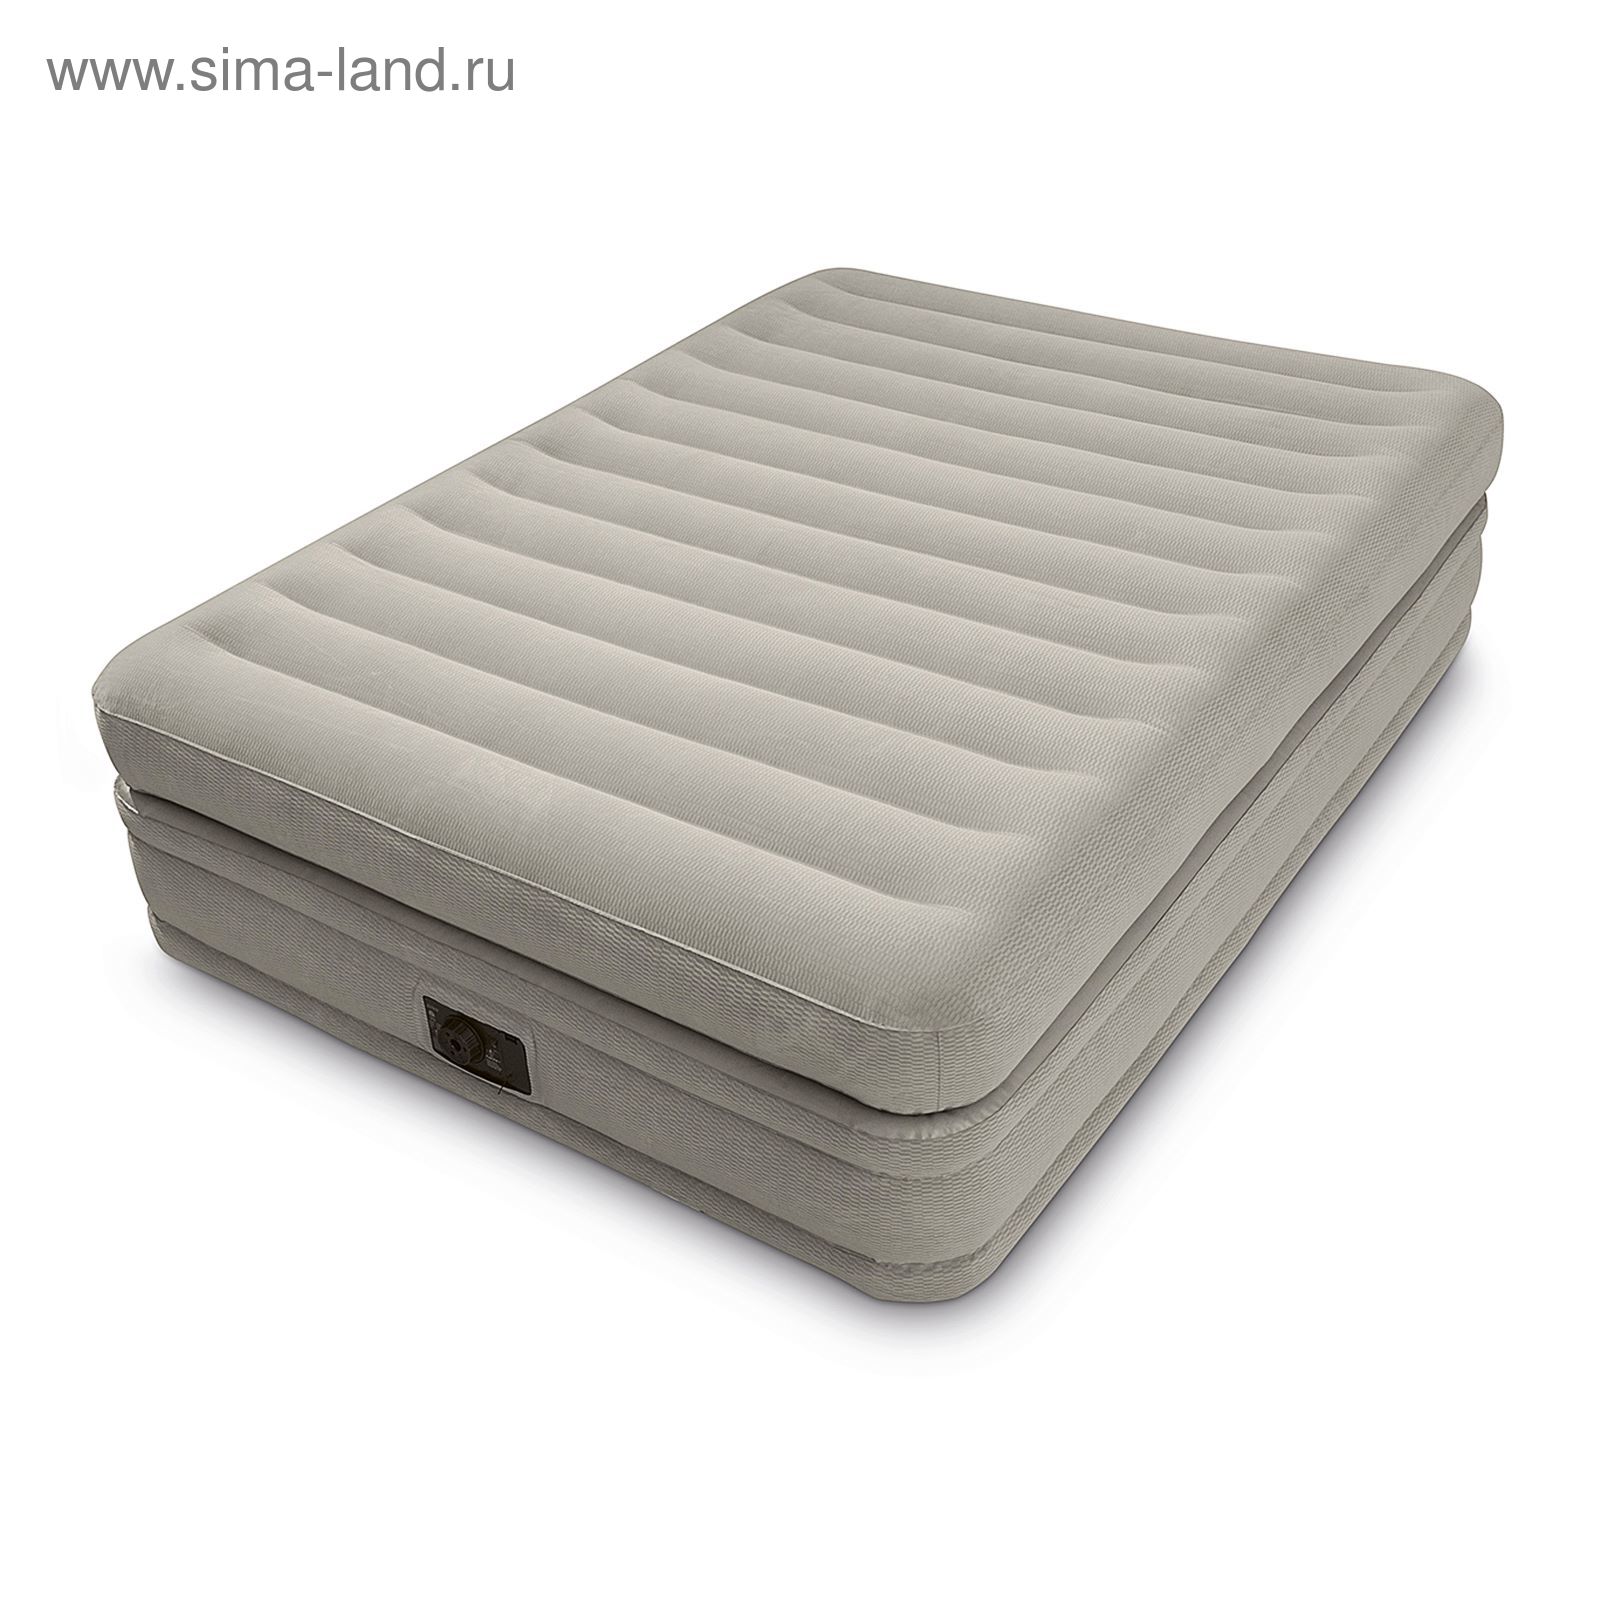 Кровать надувная Twin Prime Comfort, 99 х 191 х 51 см INTEX